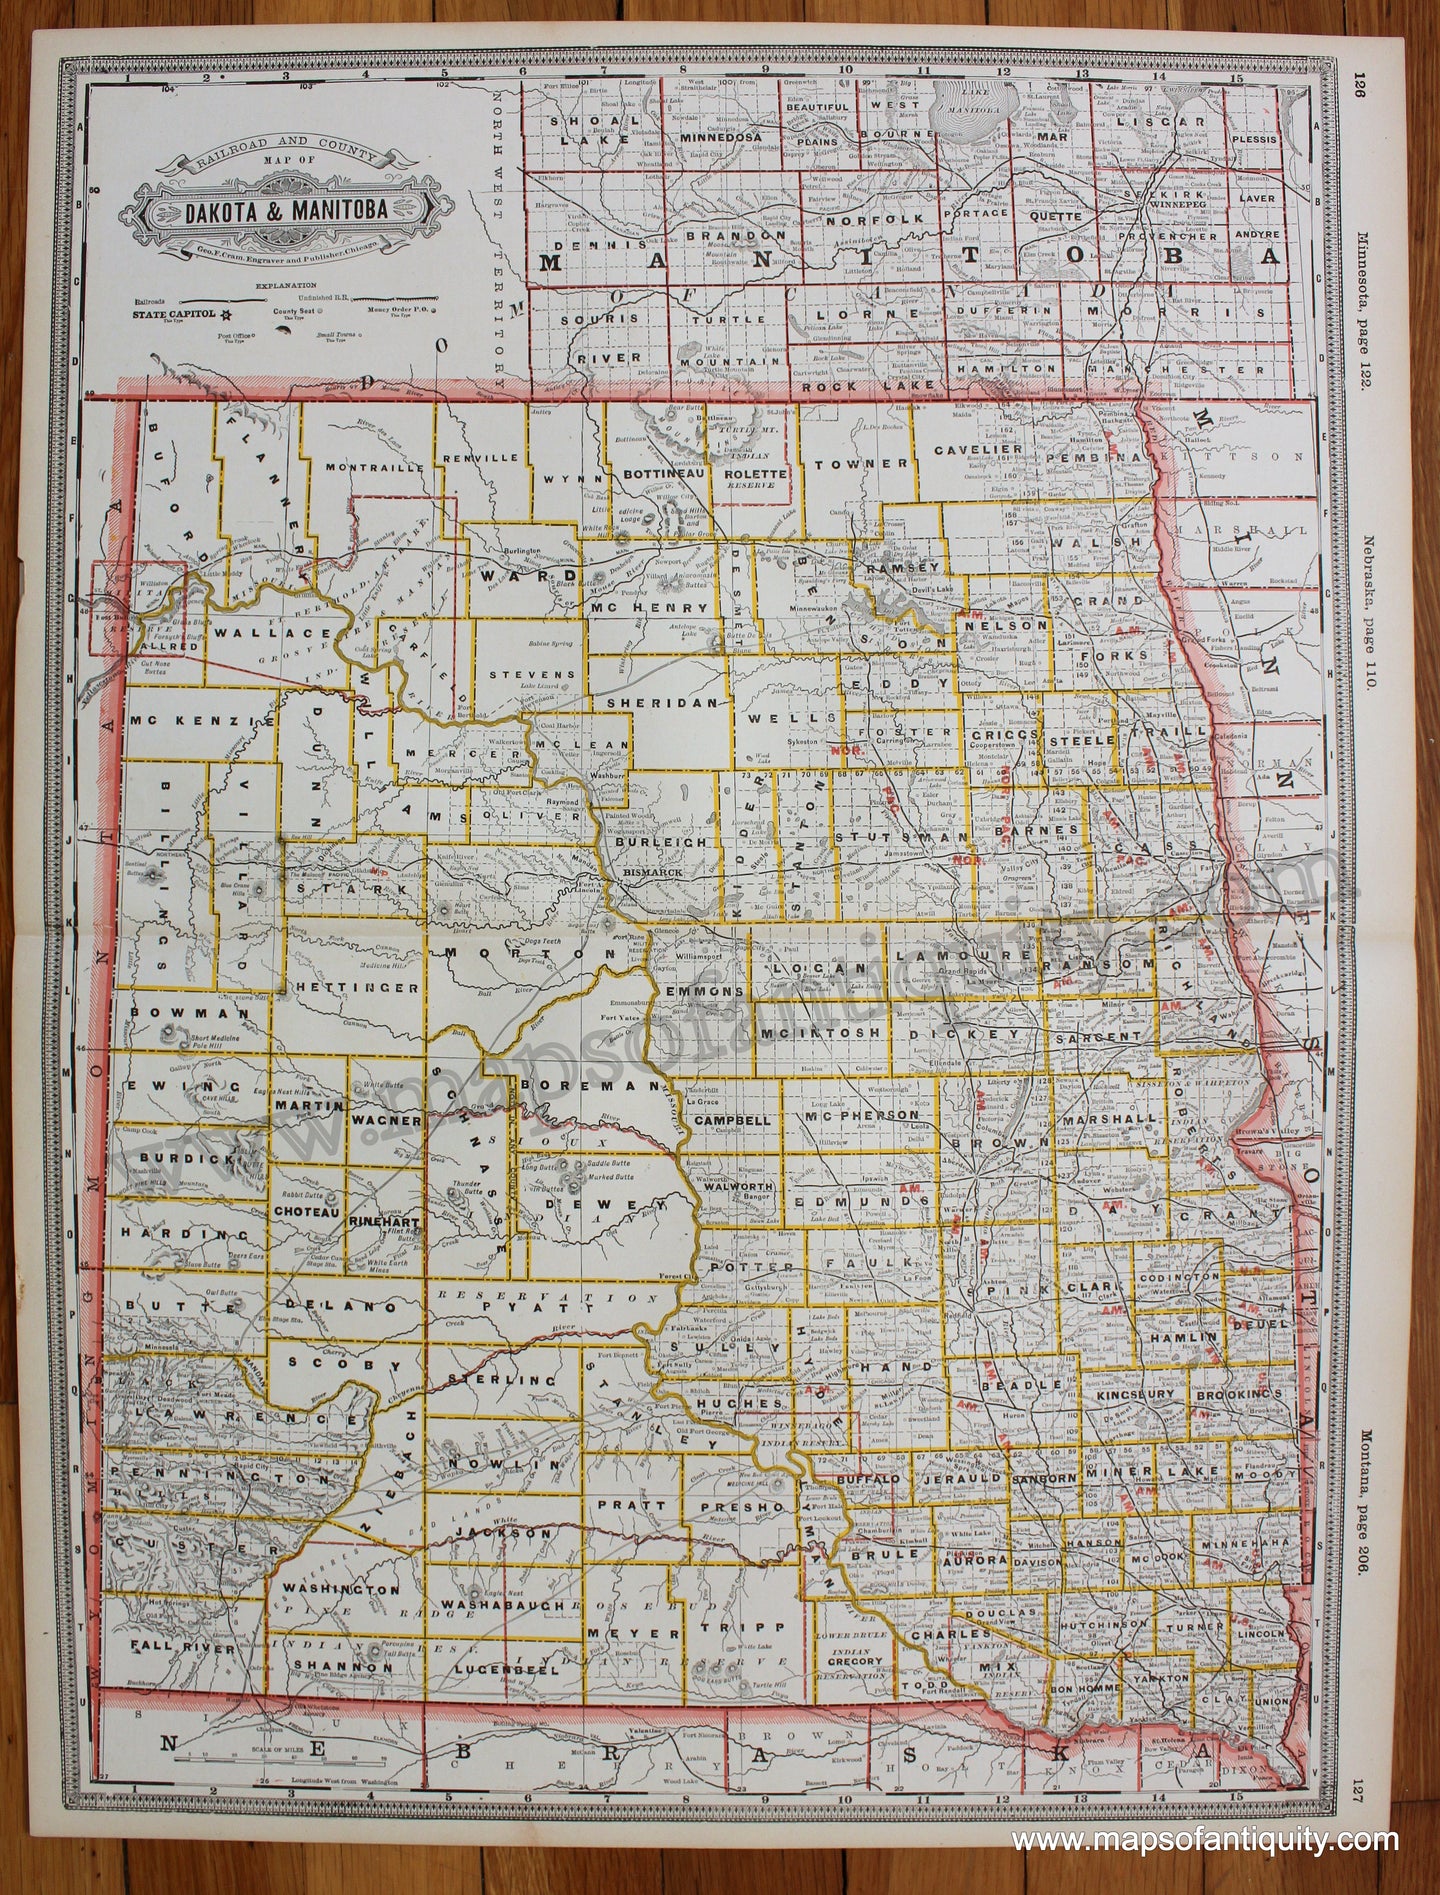 Antique-Printed-Color-Map-Railroad-and-County-Map-of-Dakota-&-Manitoba-1888-Cram-Mid-West-North-Dakota-South-Dakota-1800s-19th-century-Maps-of-Antiquity